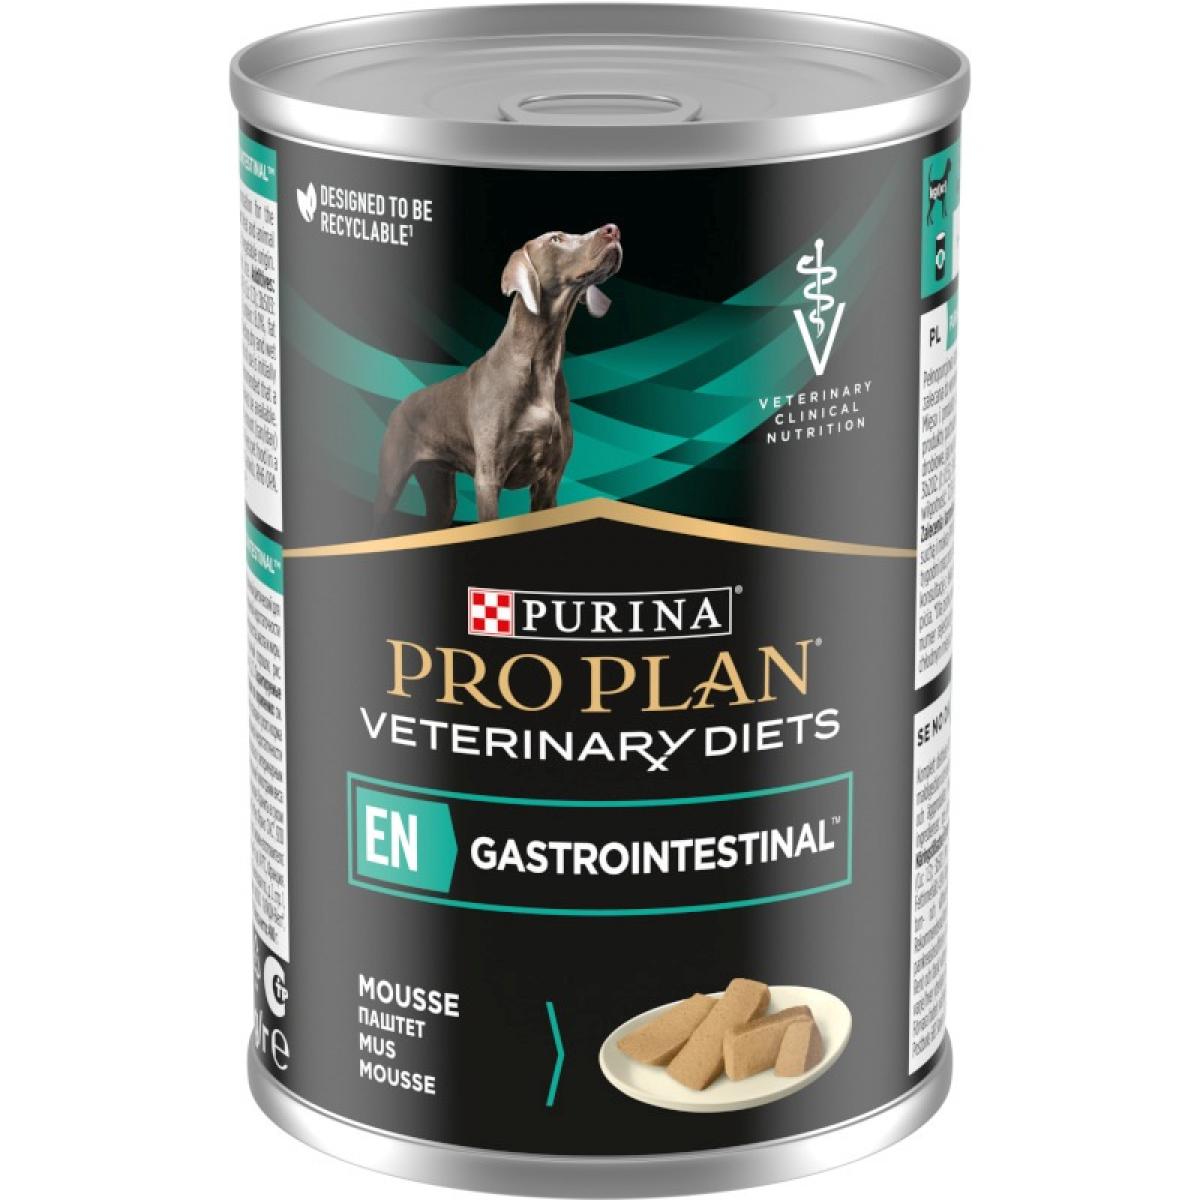 Purina PPVD Canine - EN gastrointestinal konz.400g